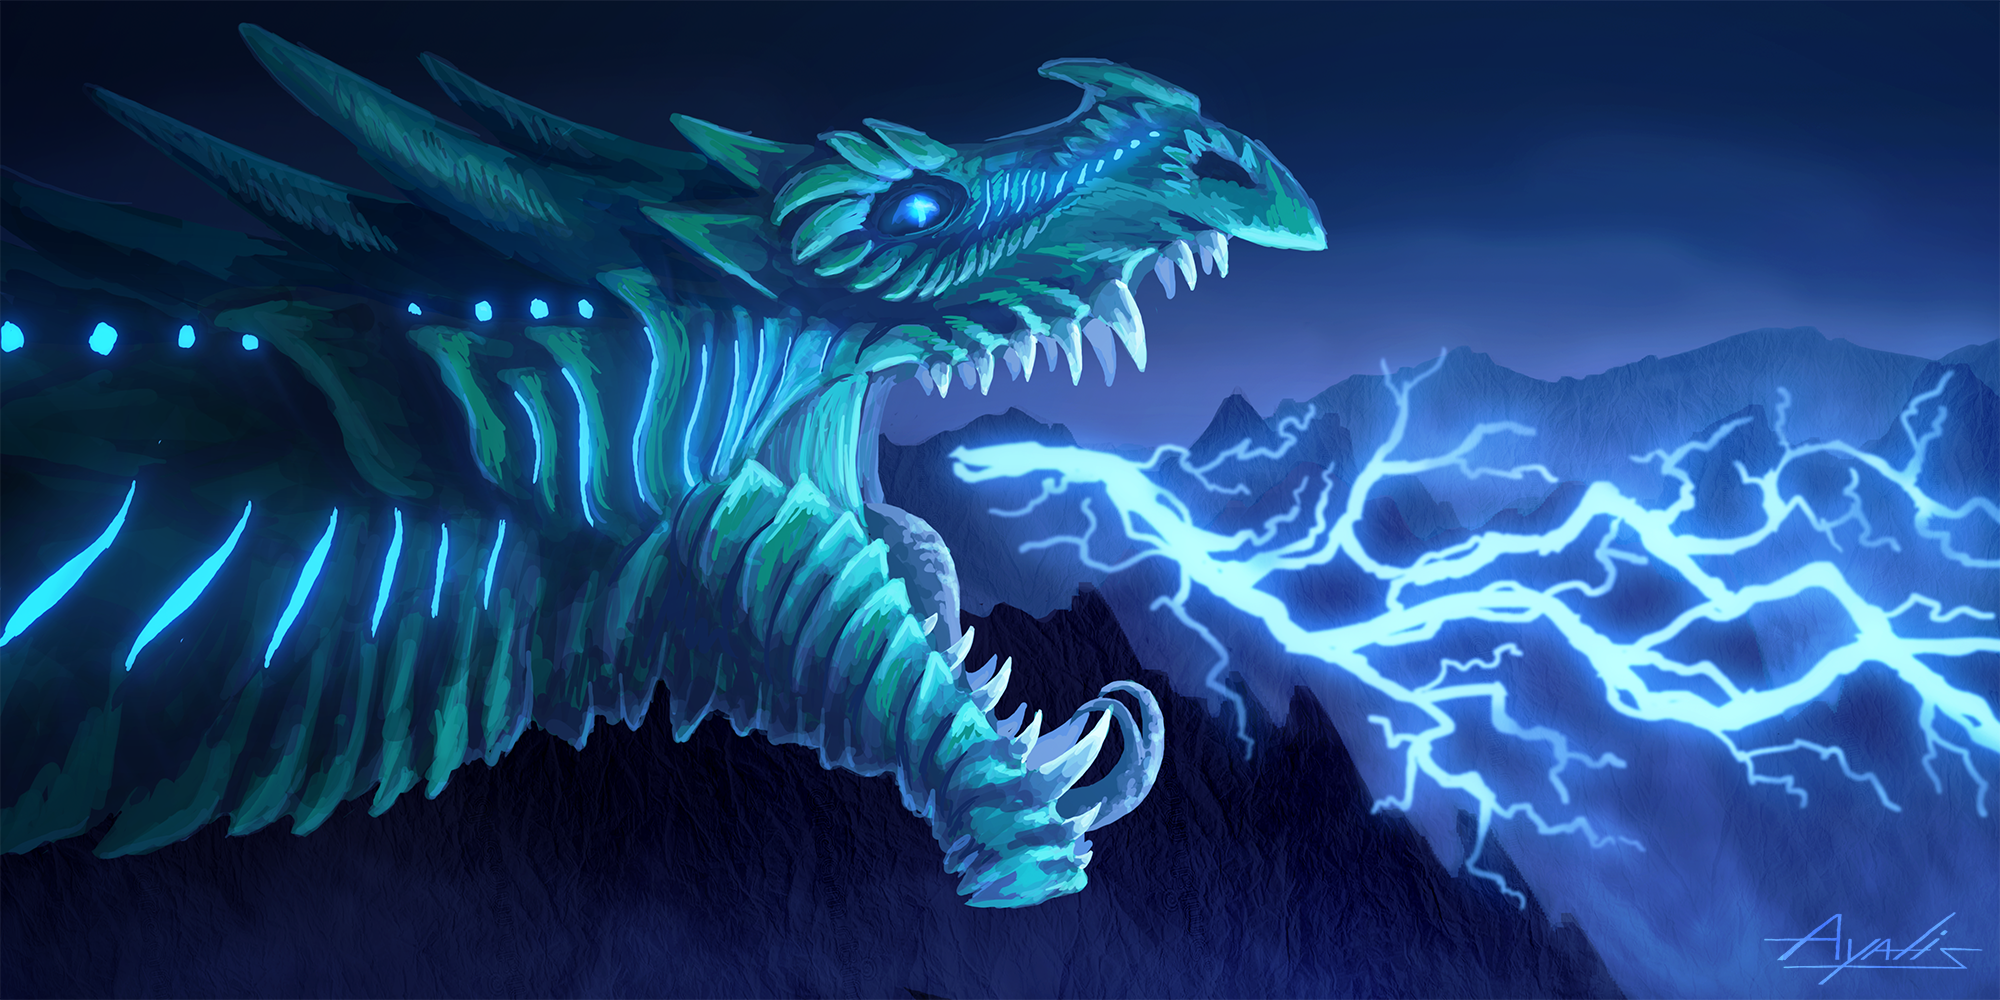 Lightning dragon - Contest entry by WingedAyalis on DeviantArt